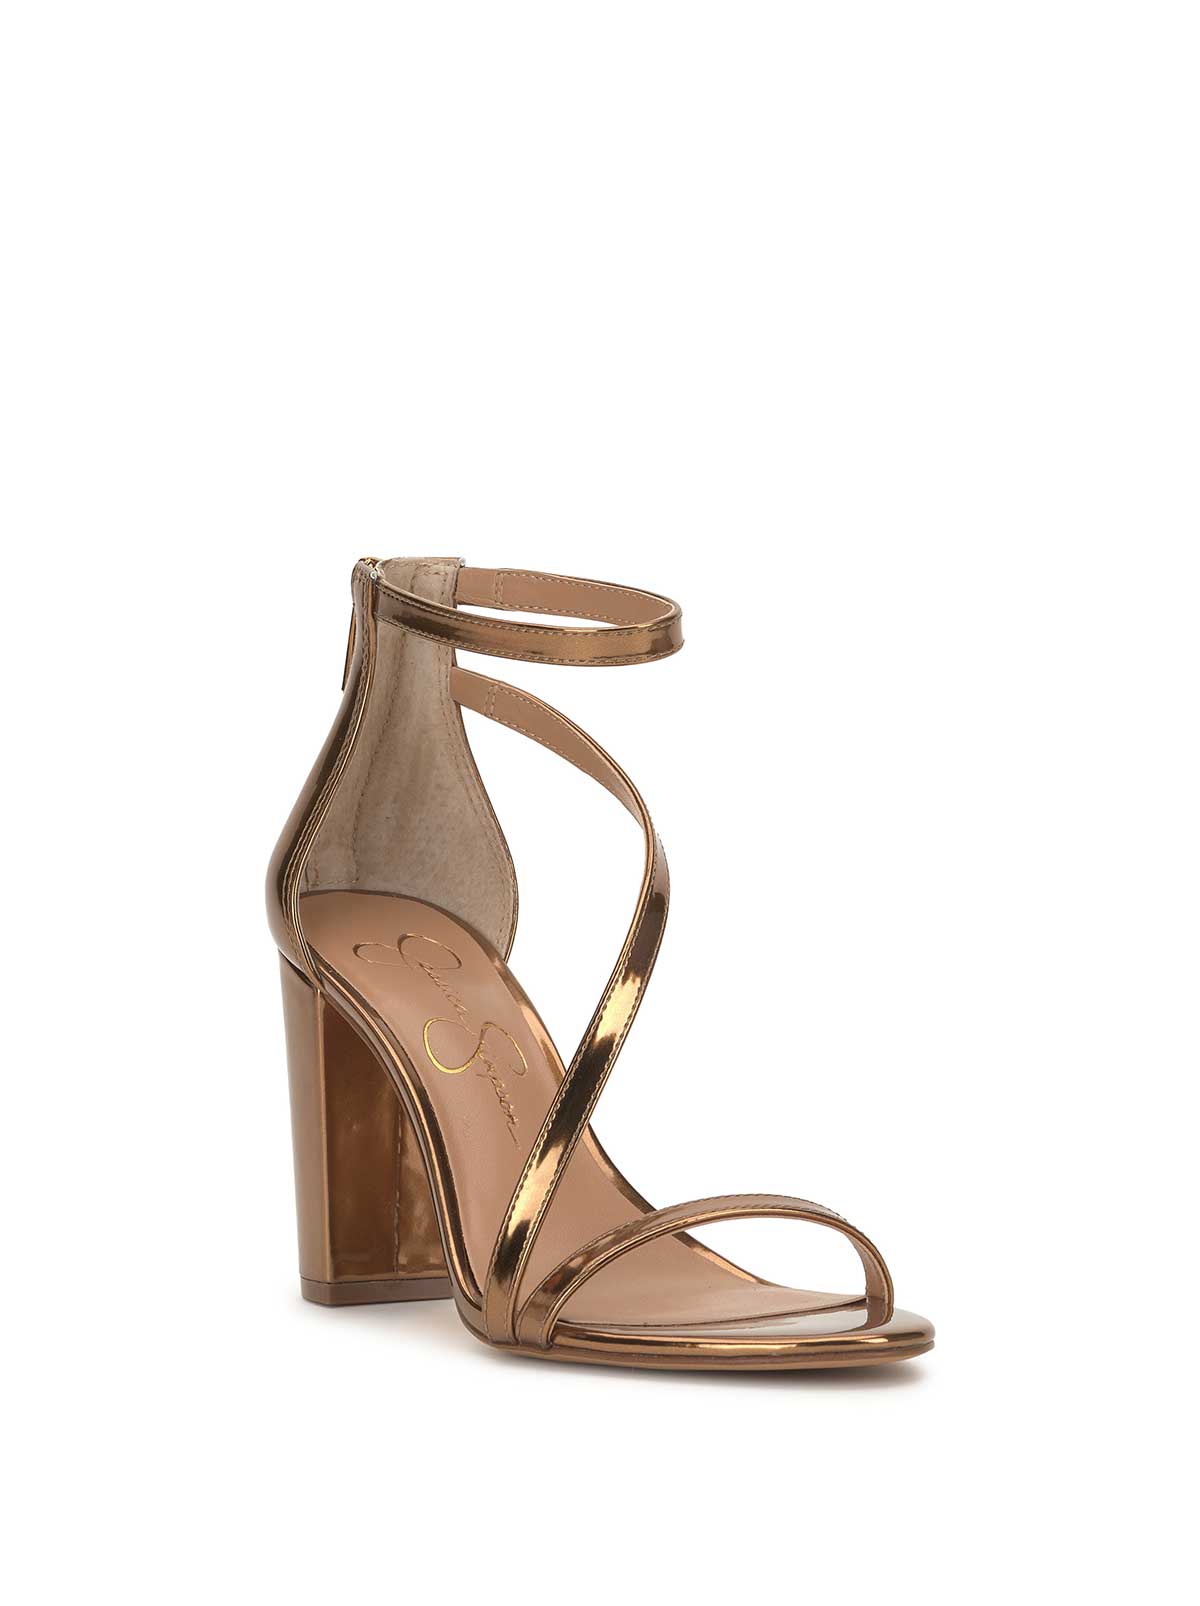 Buy Bronze Heeled Sandals for Women by HI-ATTITUDE Online | Ajio.com